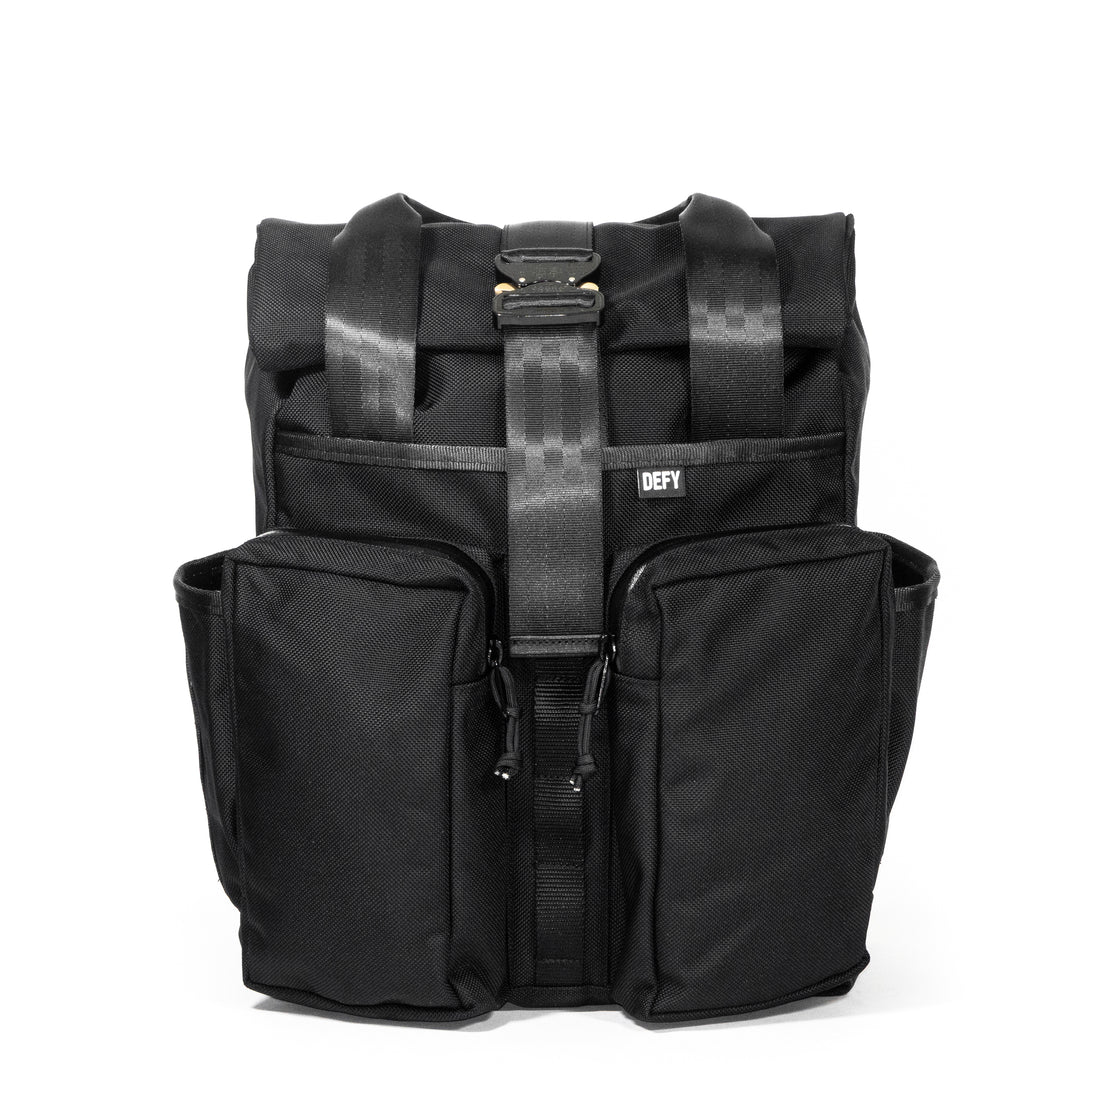 VerBockel 'Day Pack' Roll Top Backpack 2.0 Black Ballistic – DEFY